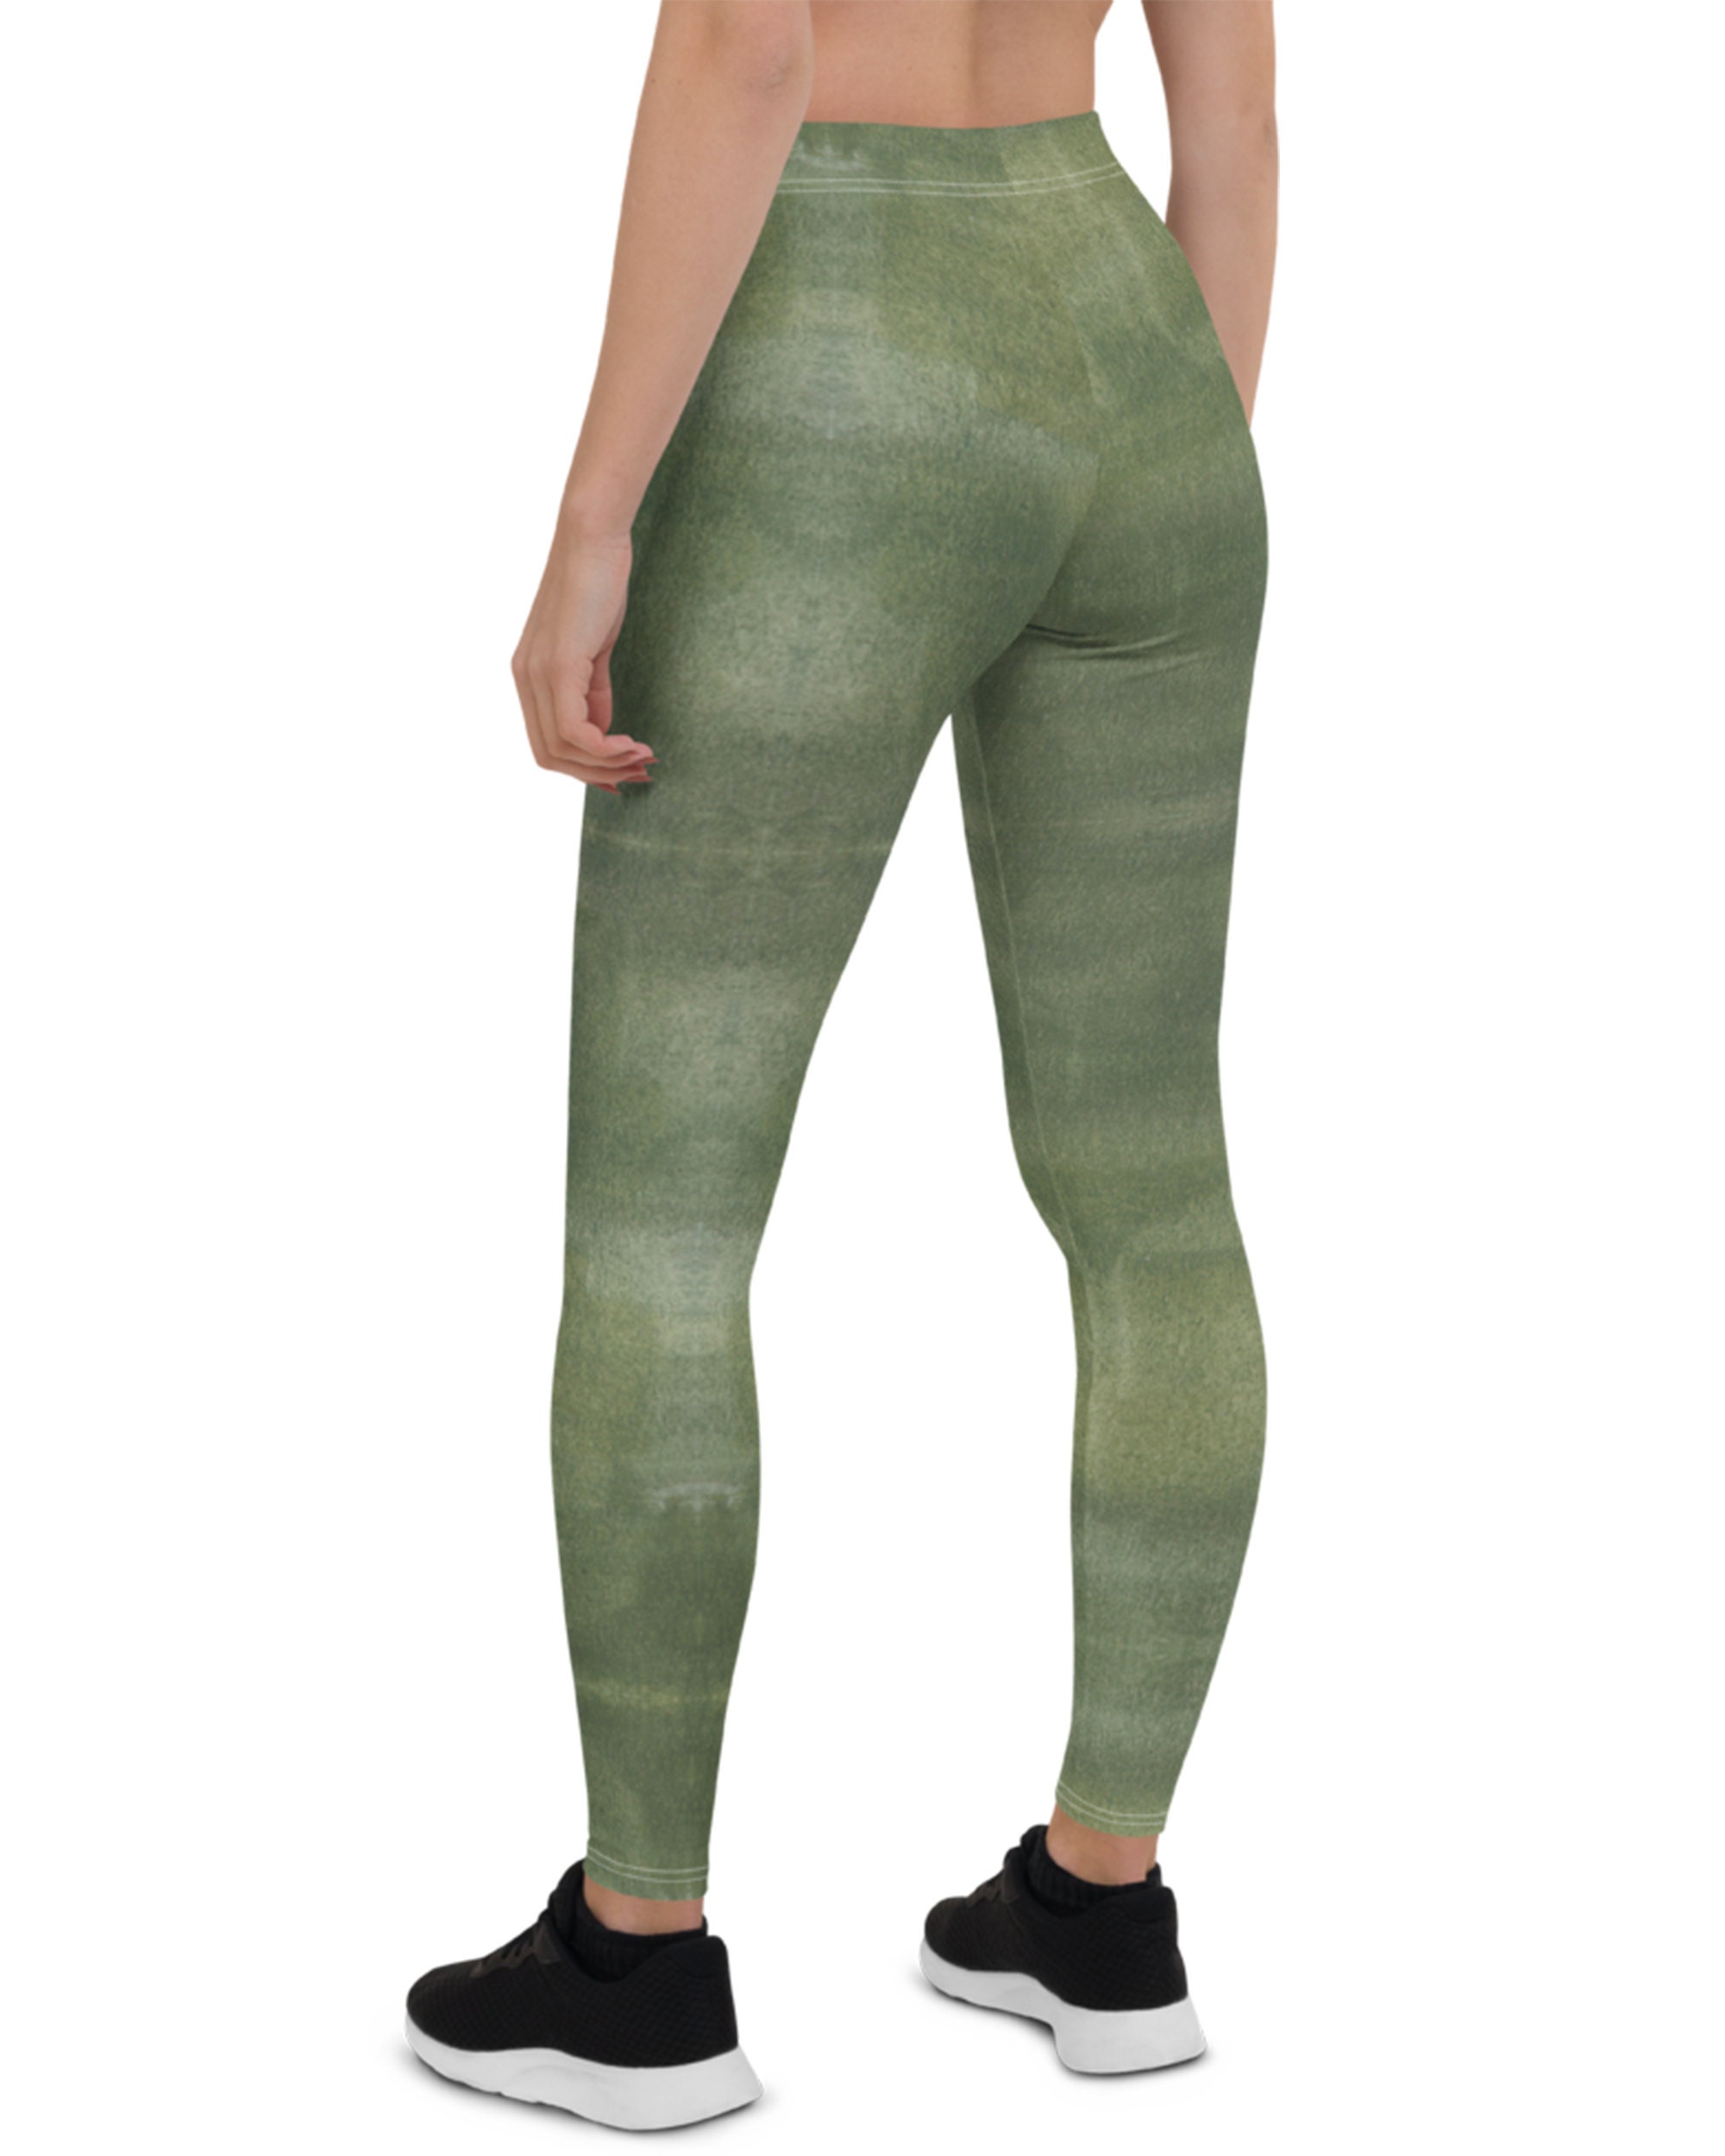 Nature Leggings for Women High Waist Green Yoga Pants Unique | Etsy